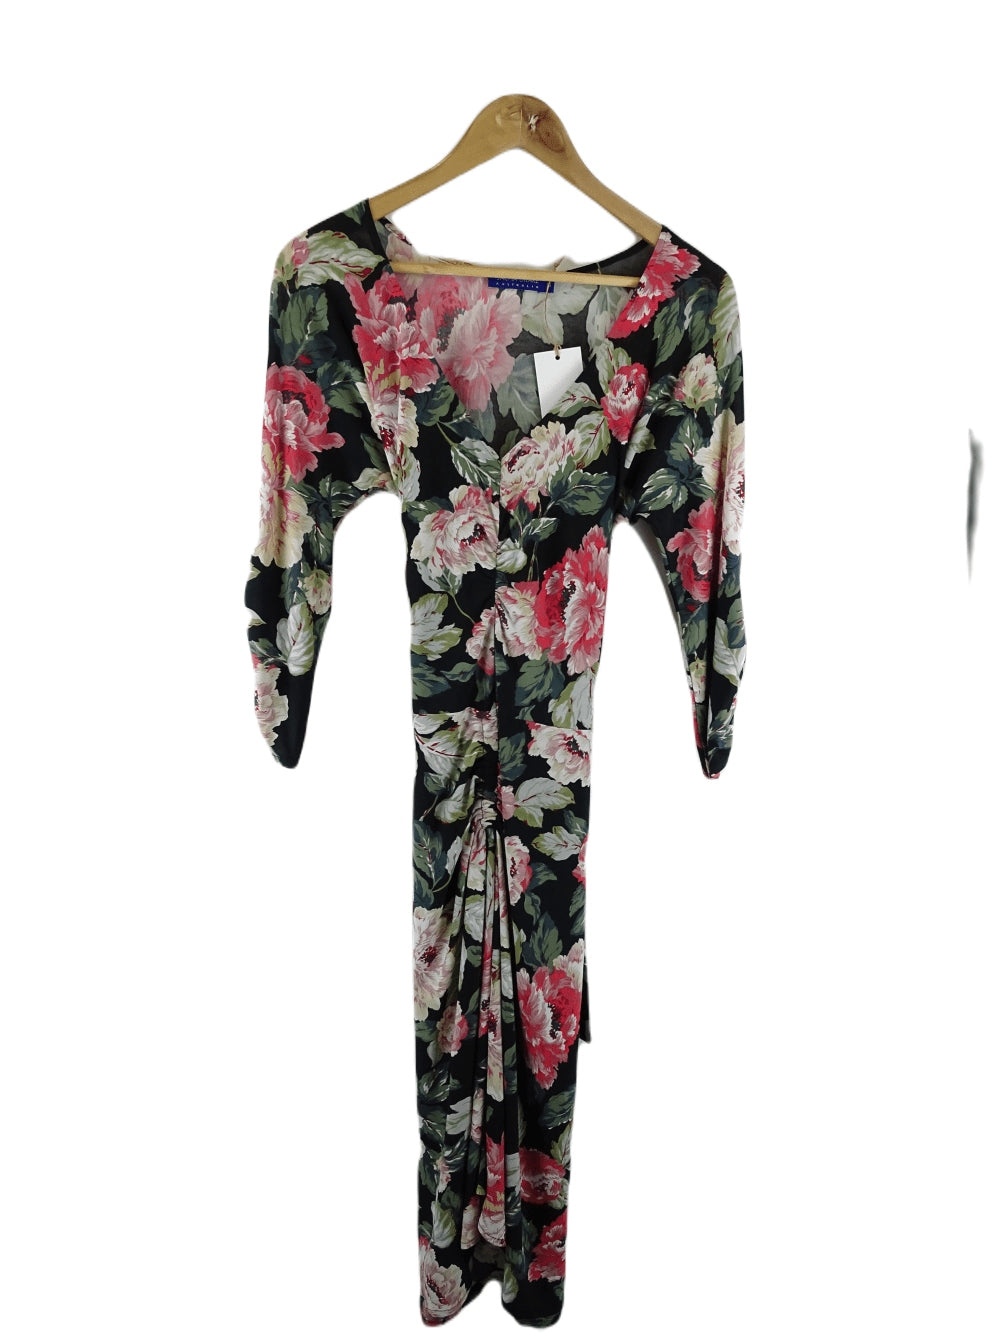 Sacha Drake Black and Floral Midi Dress 16